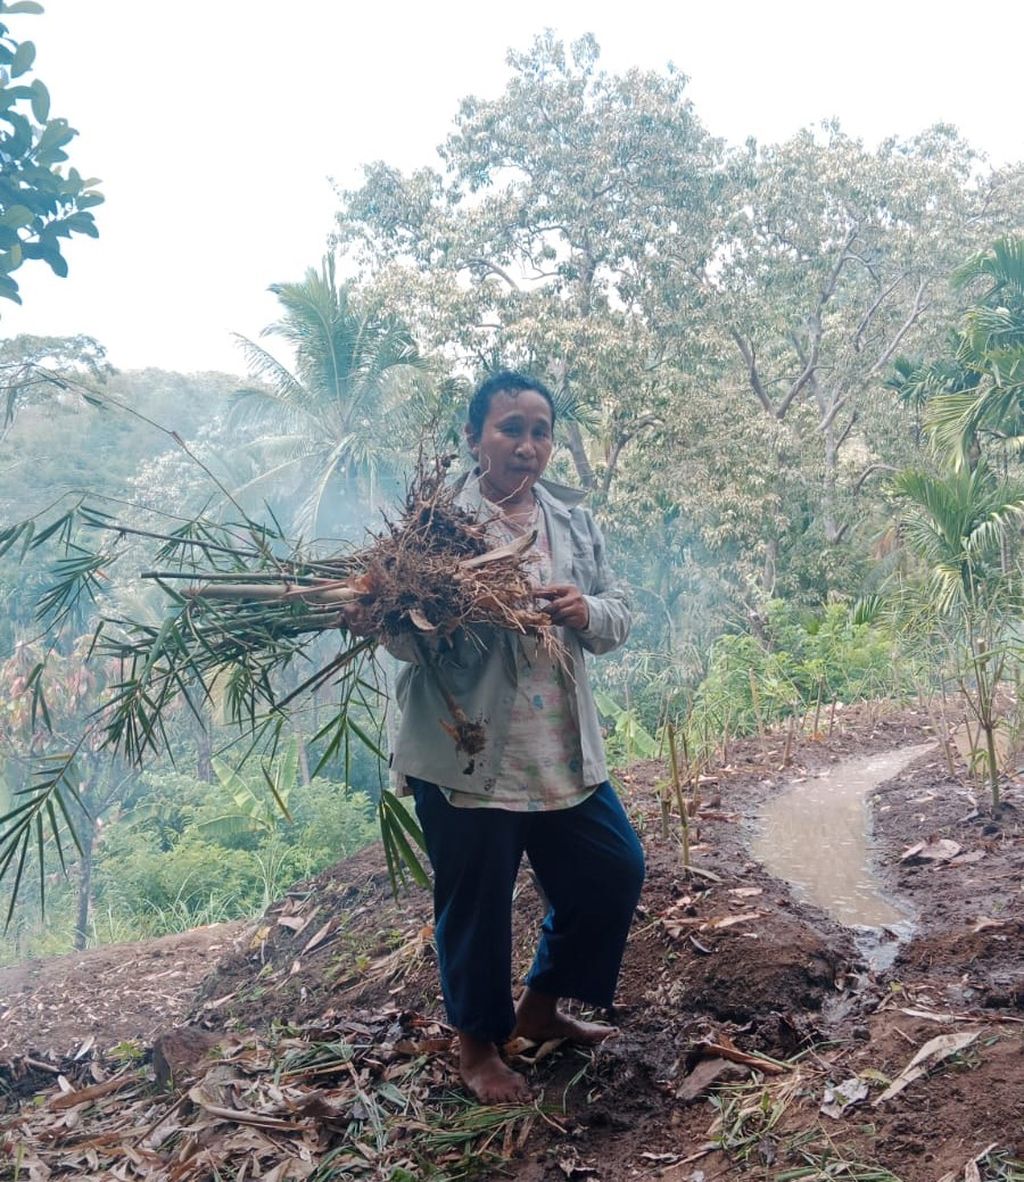 Ursula (48), salah satu anggota mama bambu di Desa Rateroru, Kecamatan Detusoko, Kabupaten Ende, mengambil anakan bambu dari tempat persemaian untuk ditanam.  Mereka melakukan penanaman bambu secara kelompok di areal lereng bukit rawan longsor selama musim hujan berlangsung.